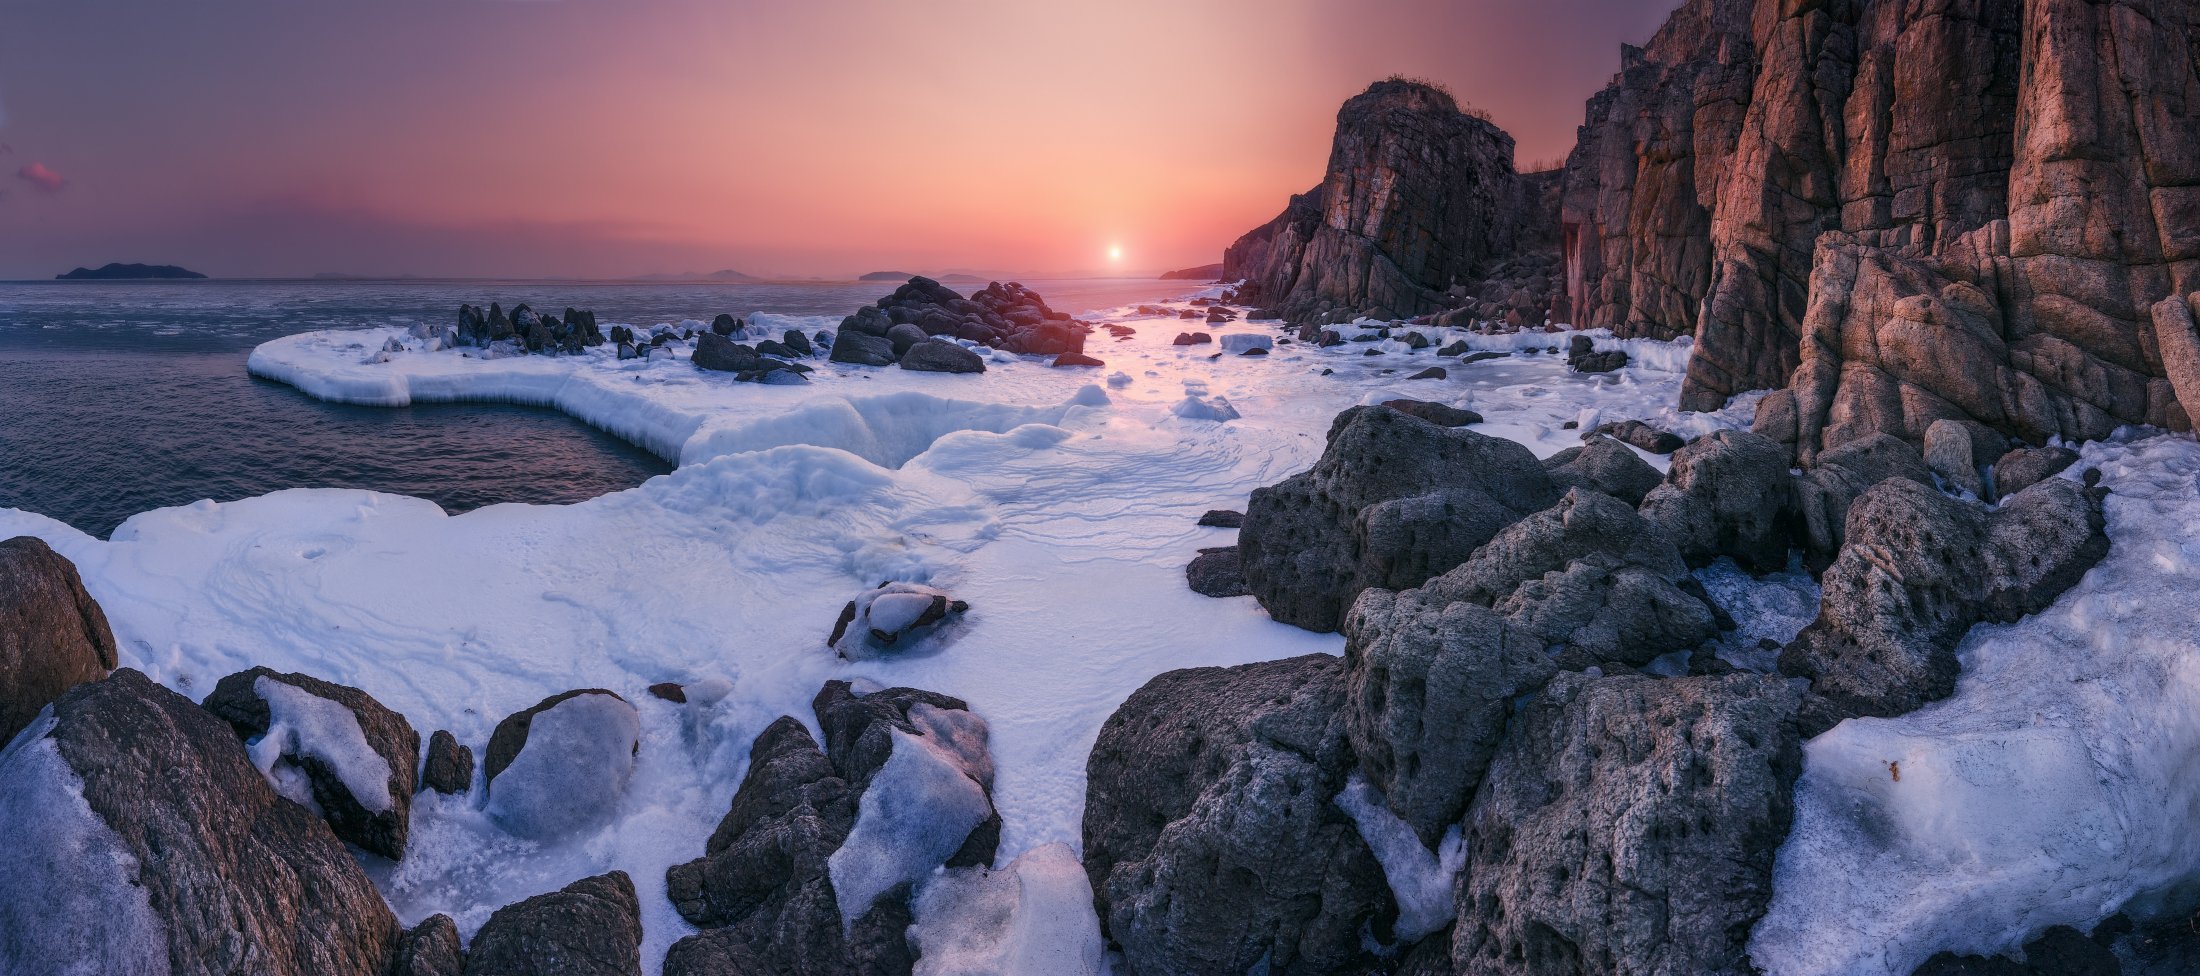 панорама, зима, море, скалы, камни, закат, солнце, Андрей Кровлин